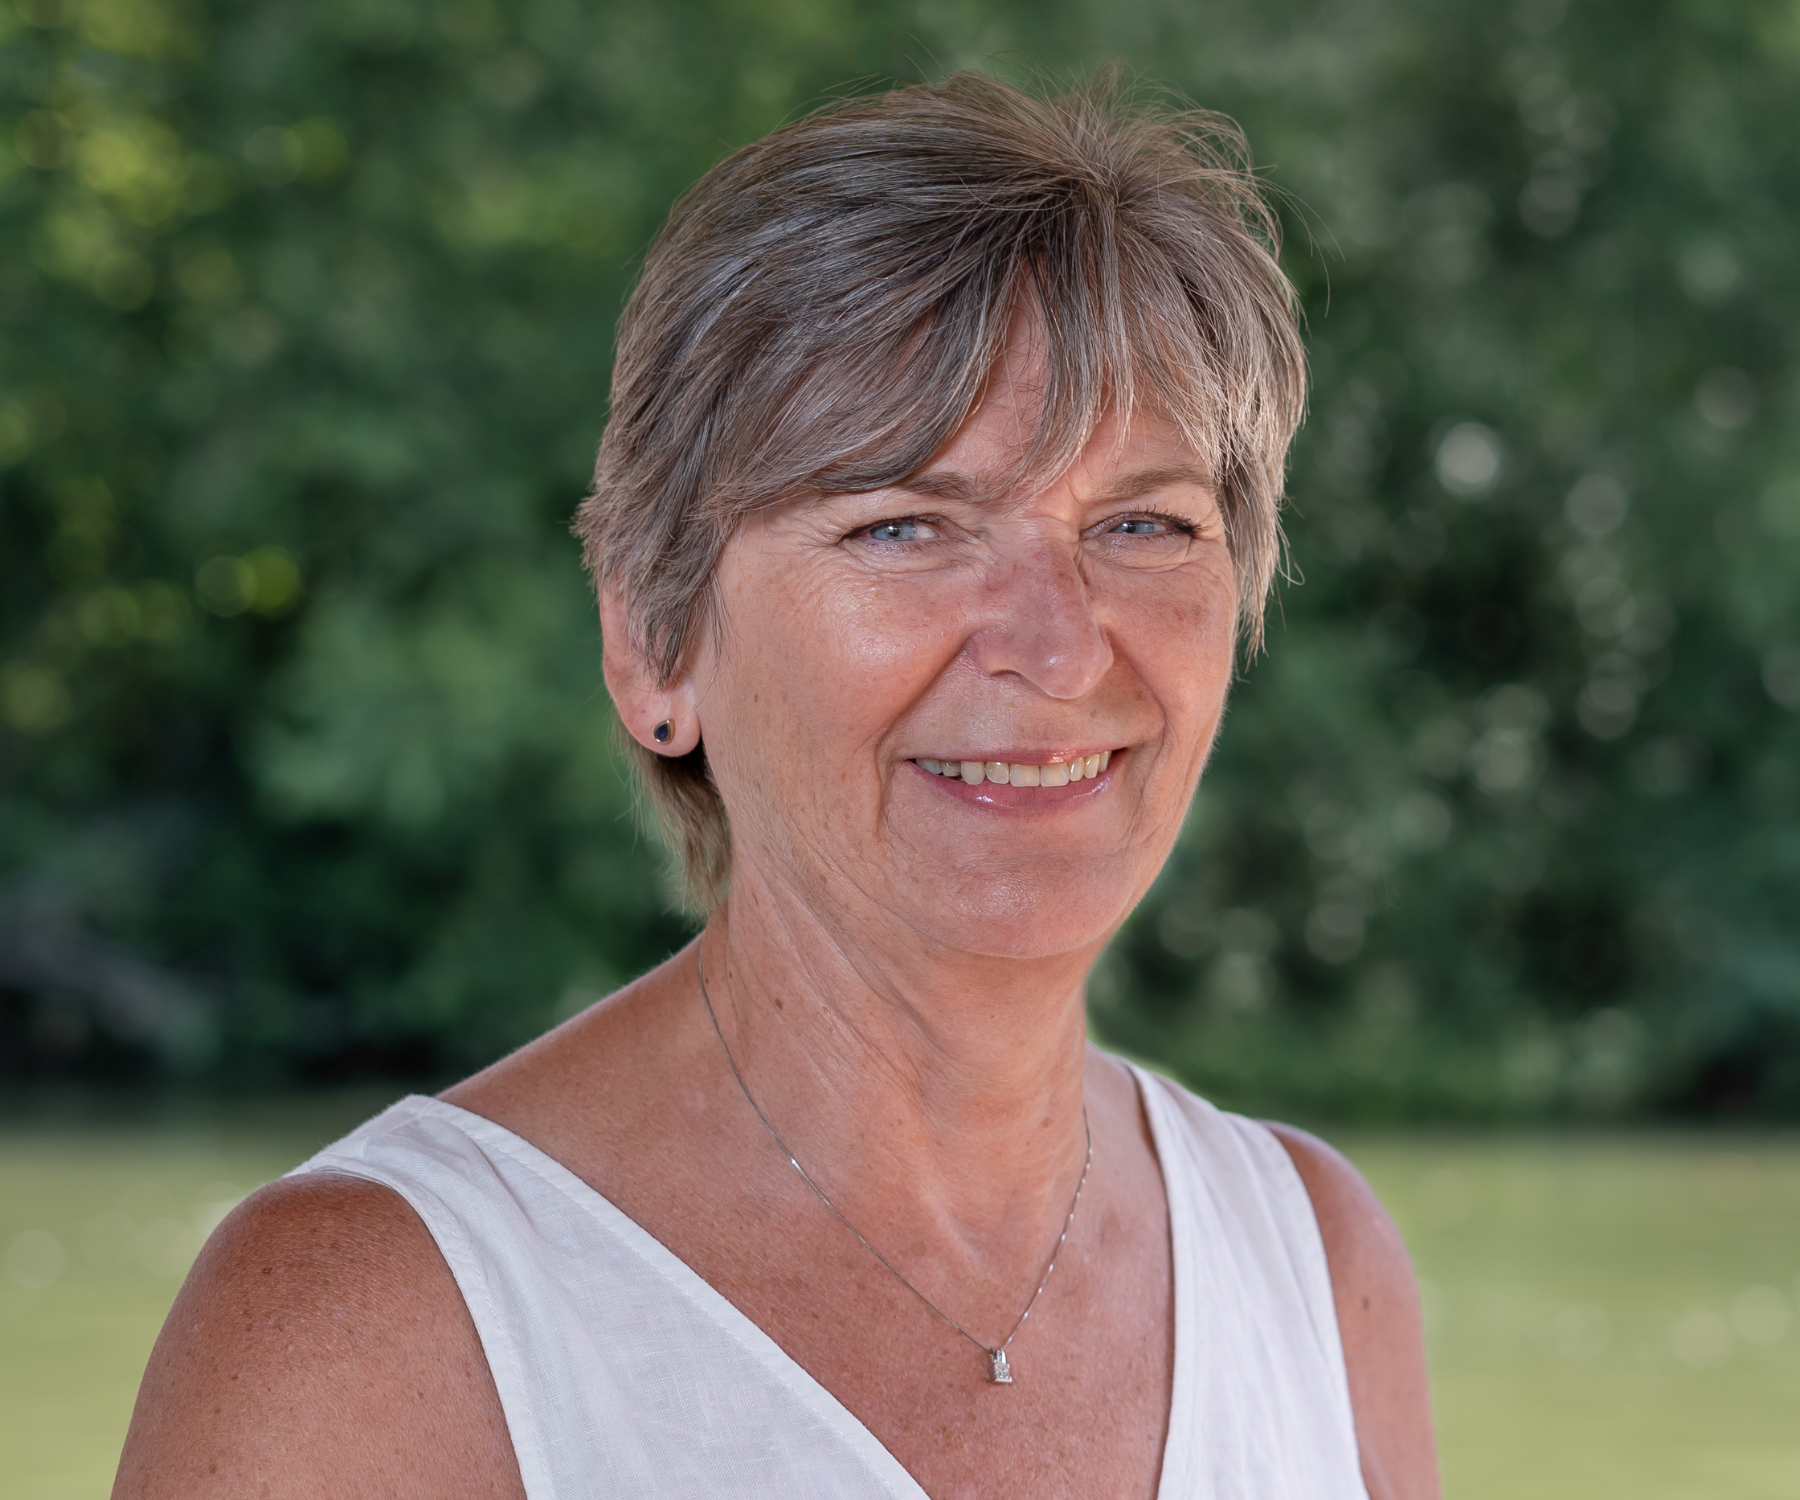 Jane Corbett, Head of Professional Services at Jigsaw Cloud